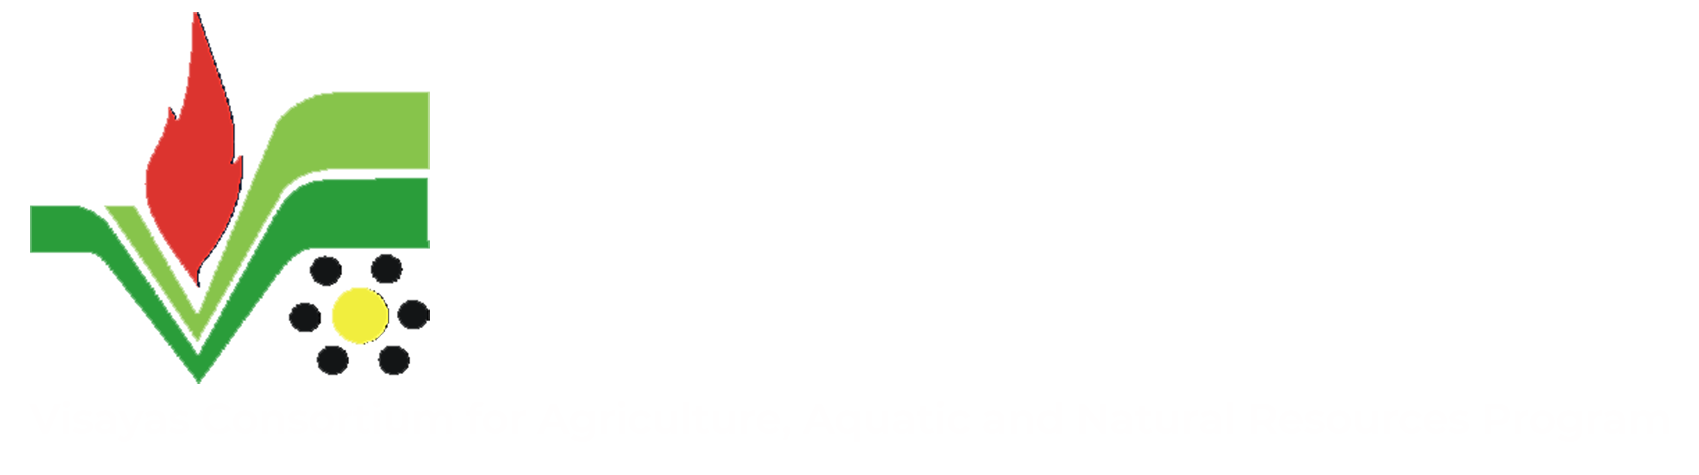 Visayas Consortium for Agriculture, Aquatic and Natural Resources Program - ViCARP